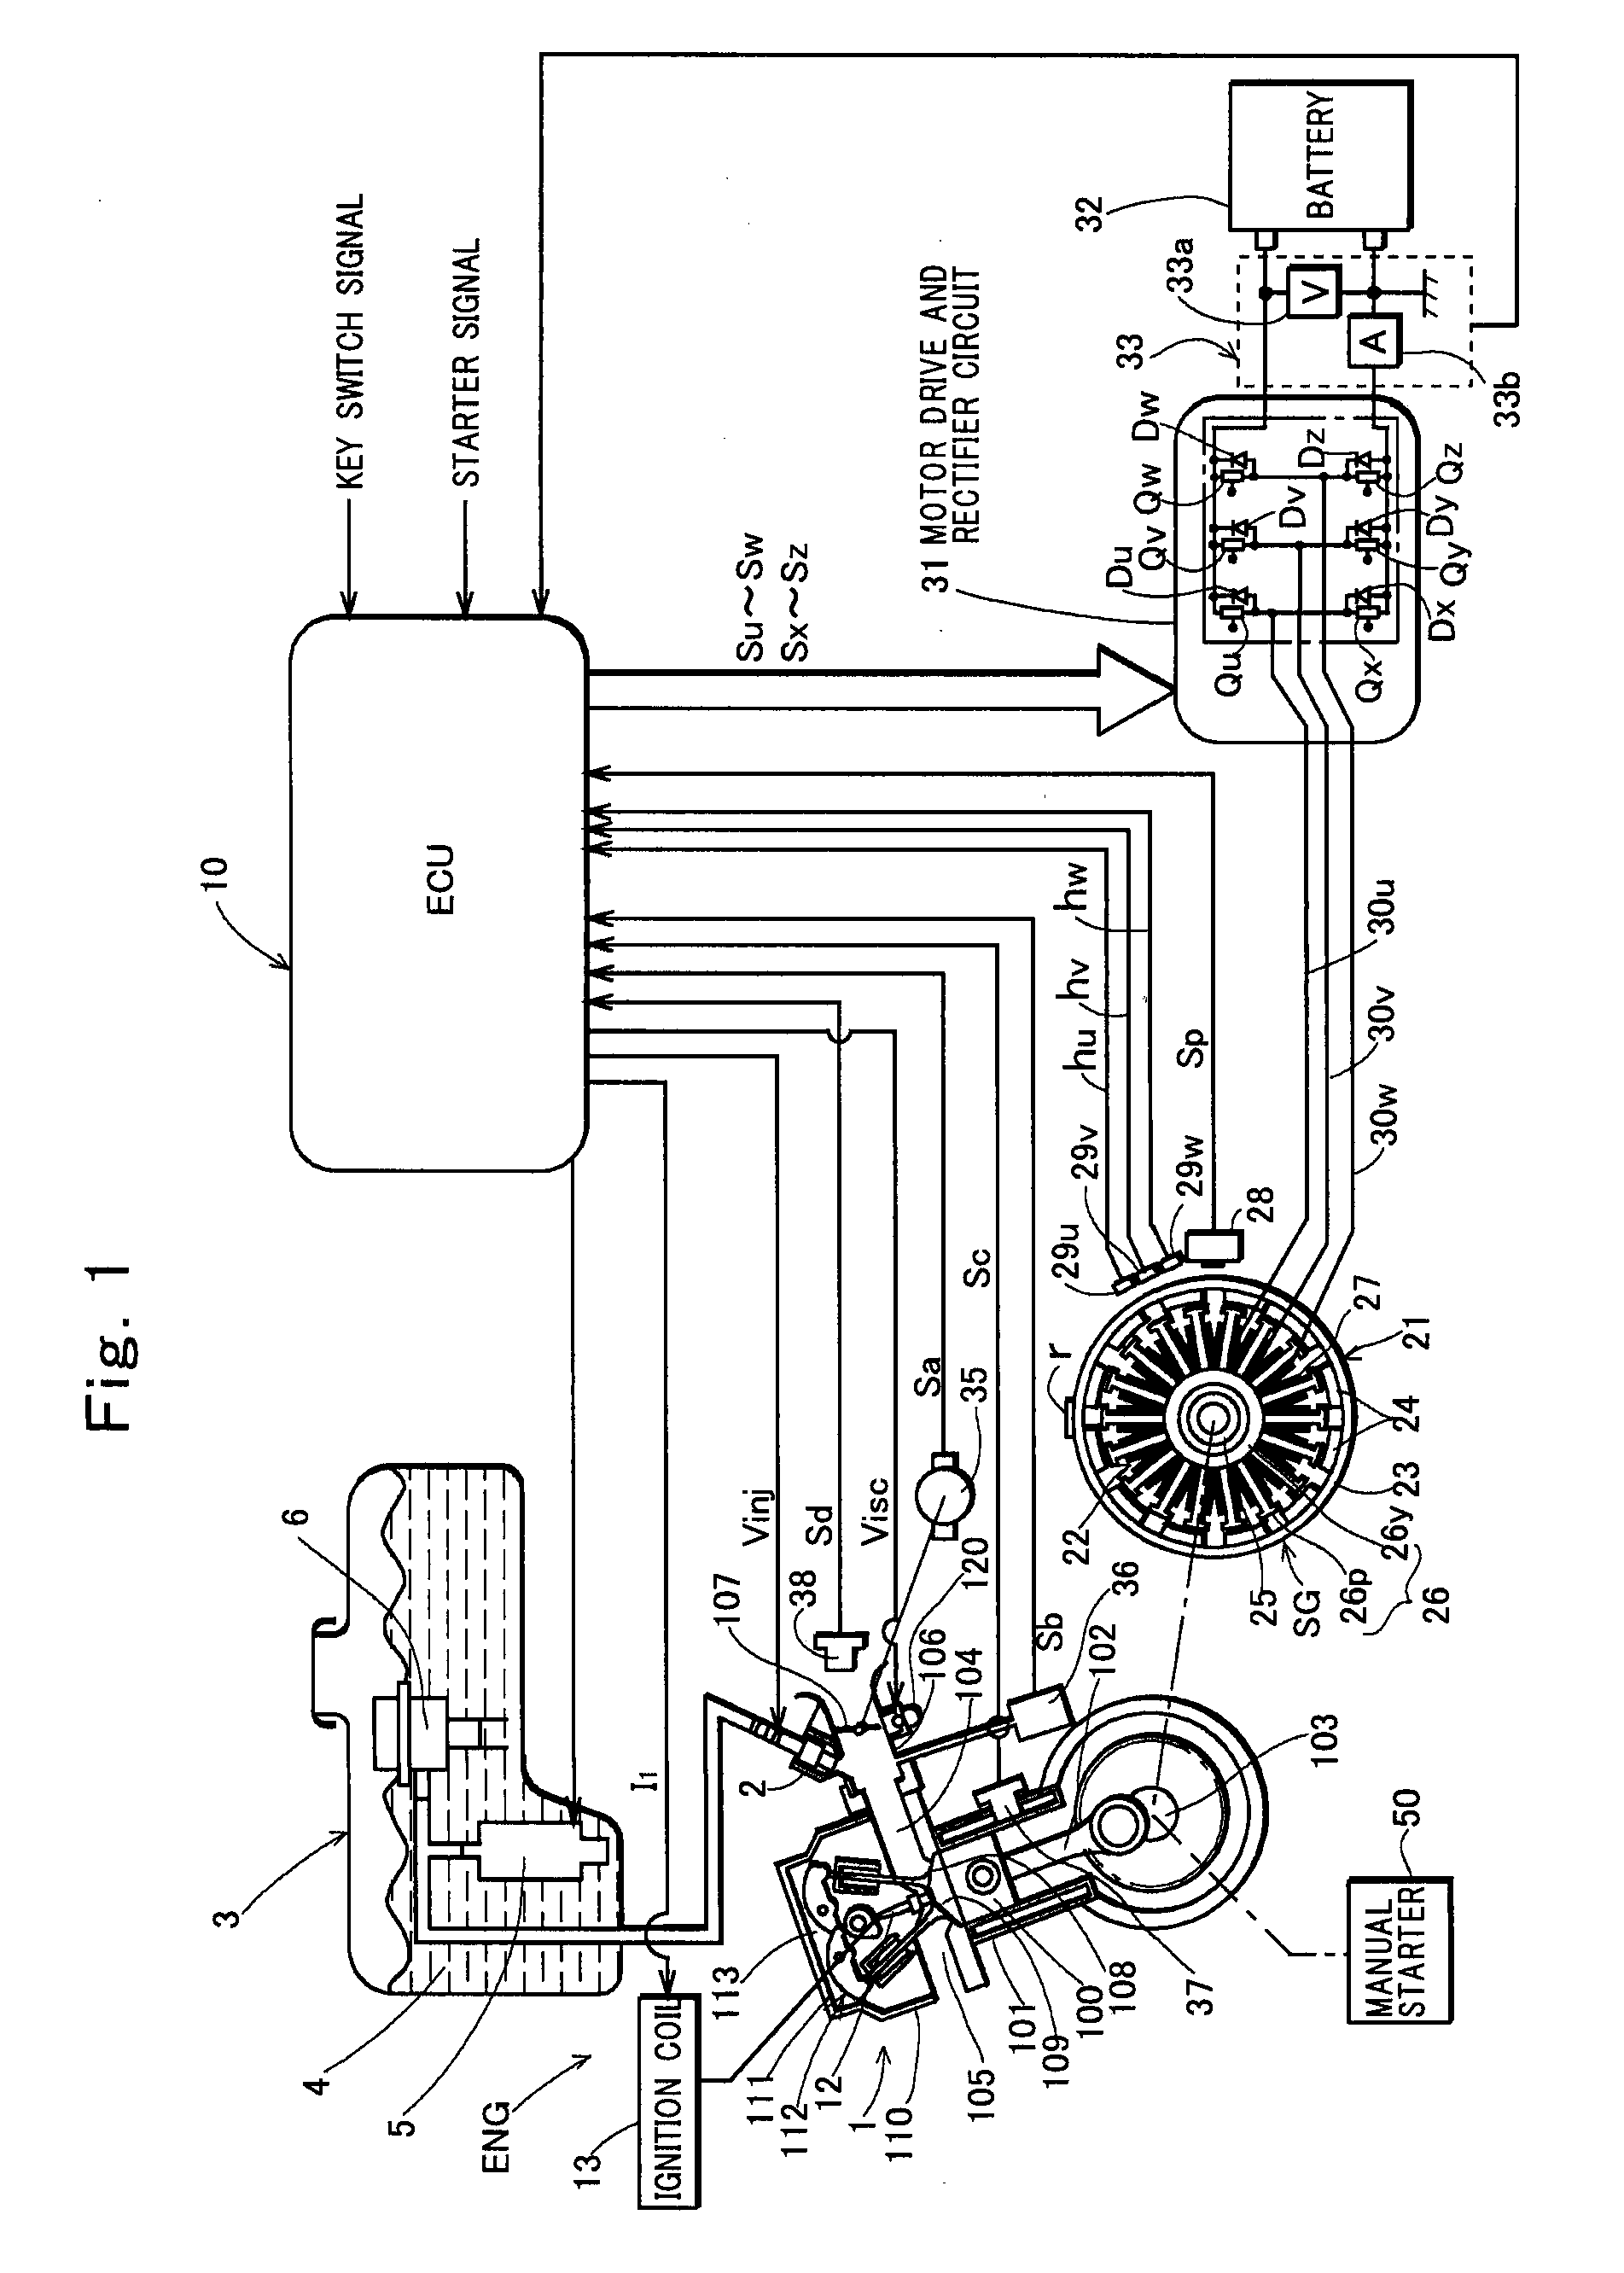 Engine starting device